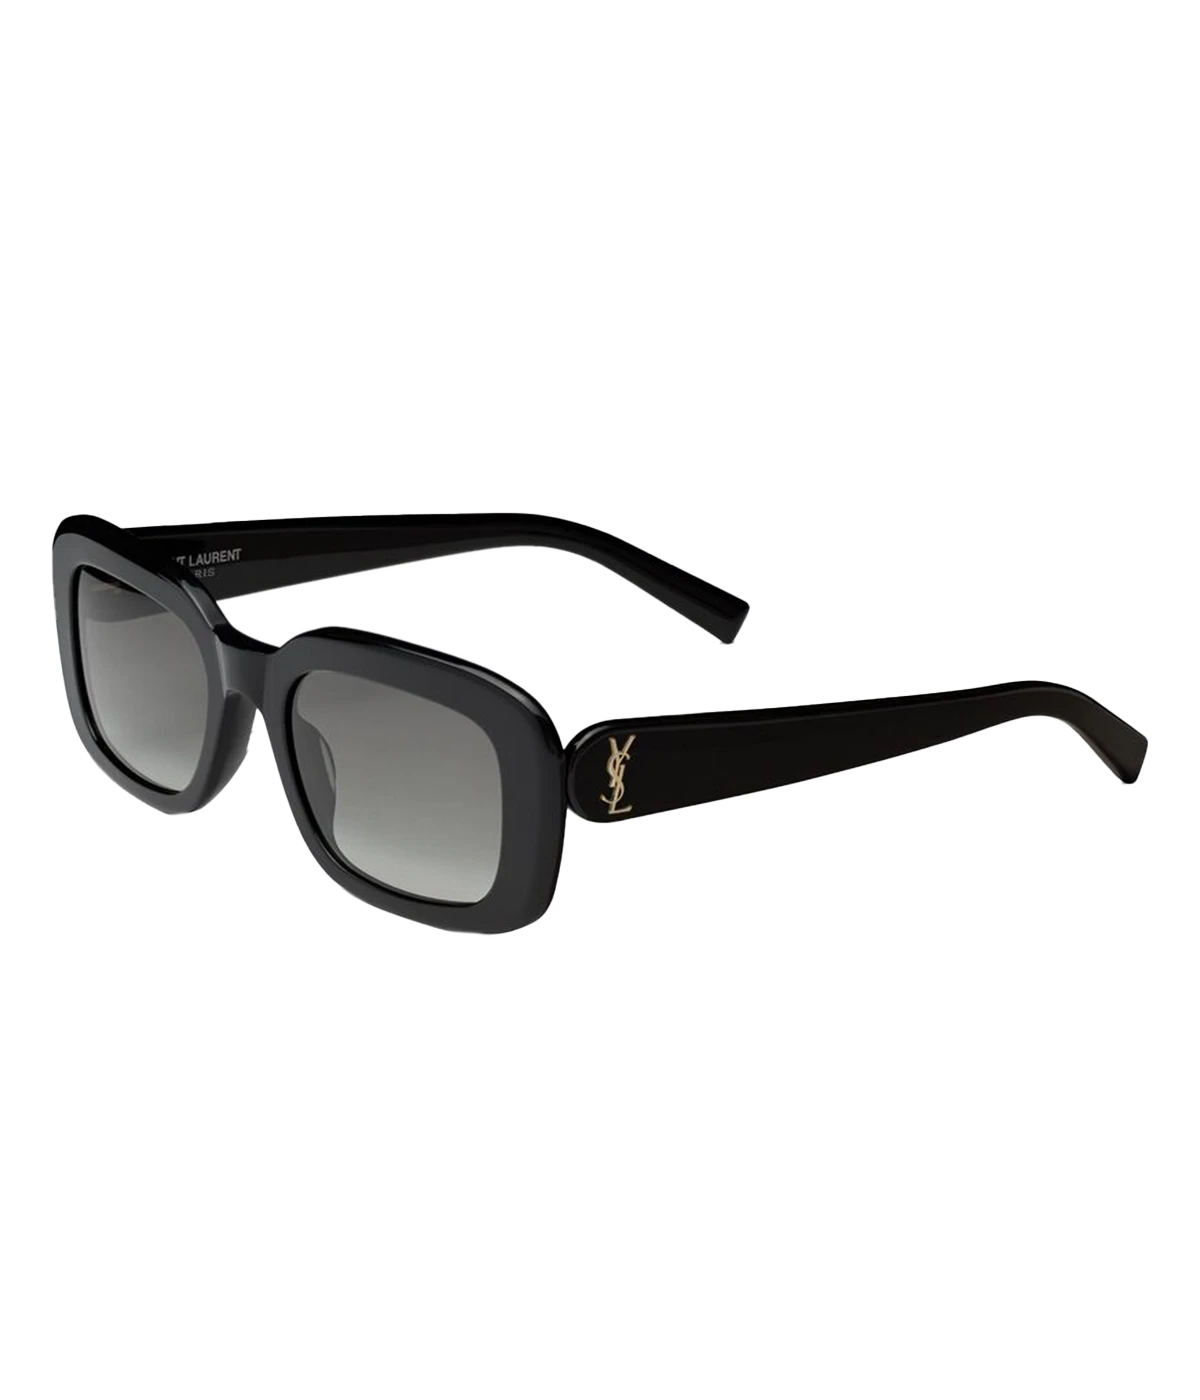 Squre Frame Sunglasses in Black